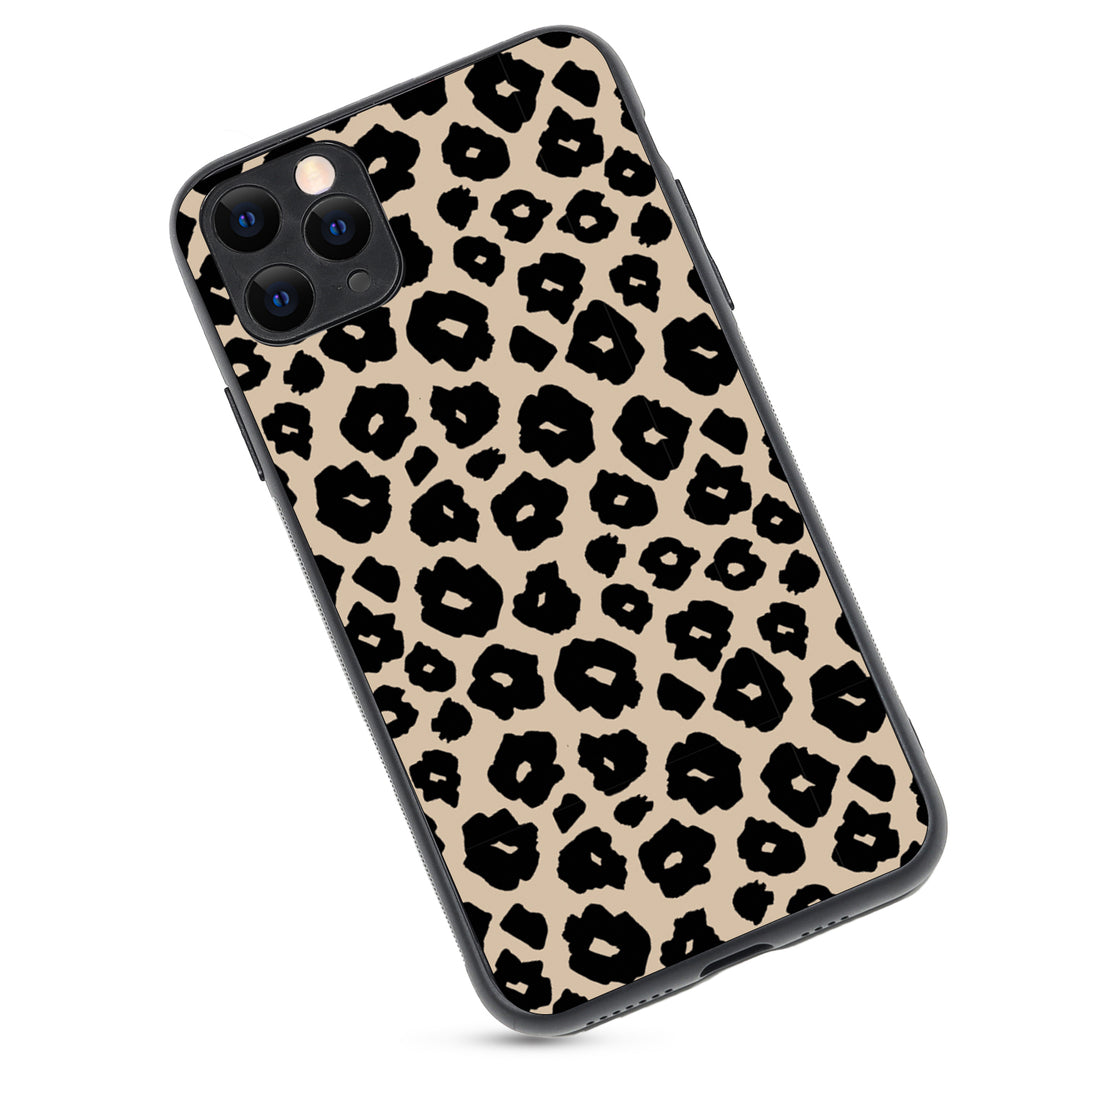 Leopard Animal Print iPhone 11 Pro Max Case